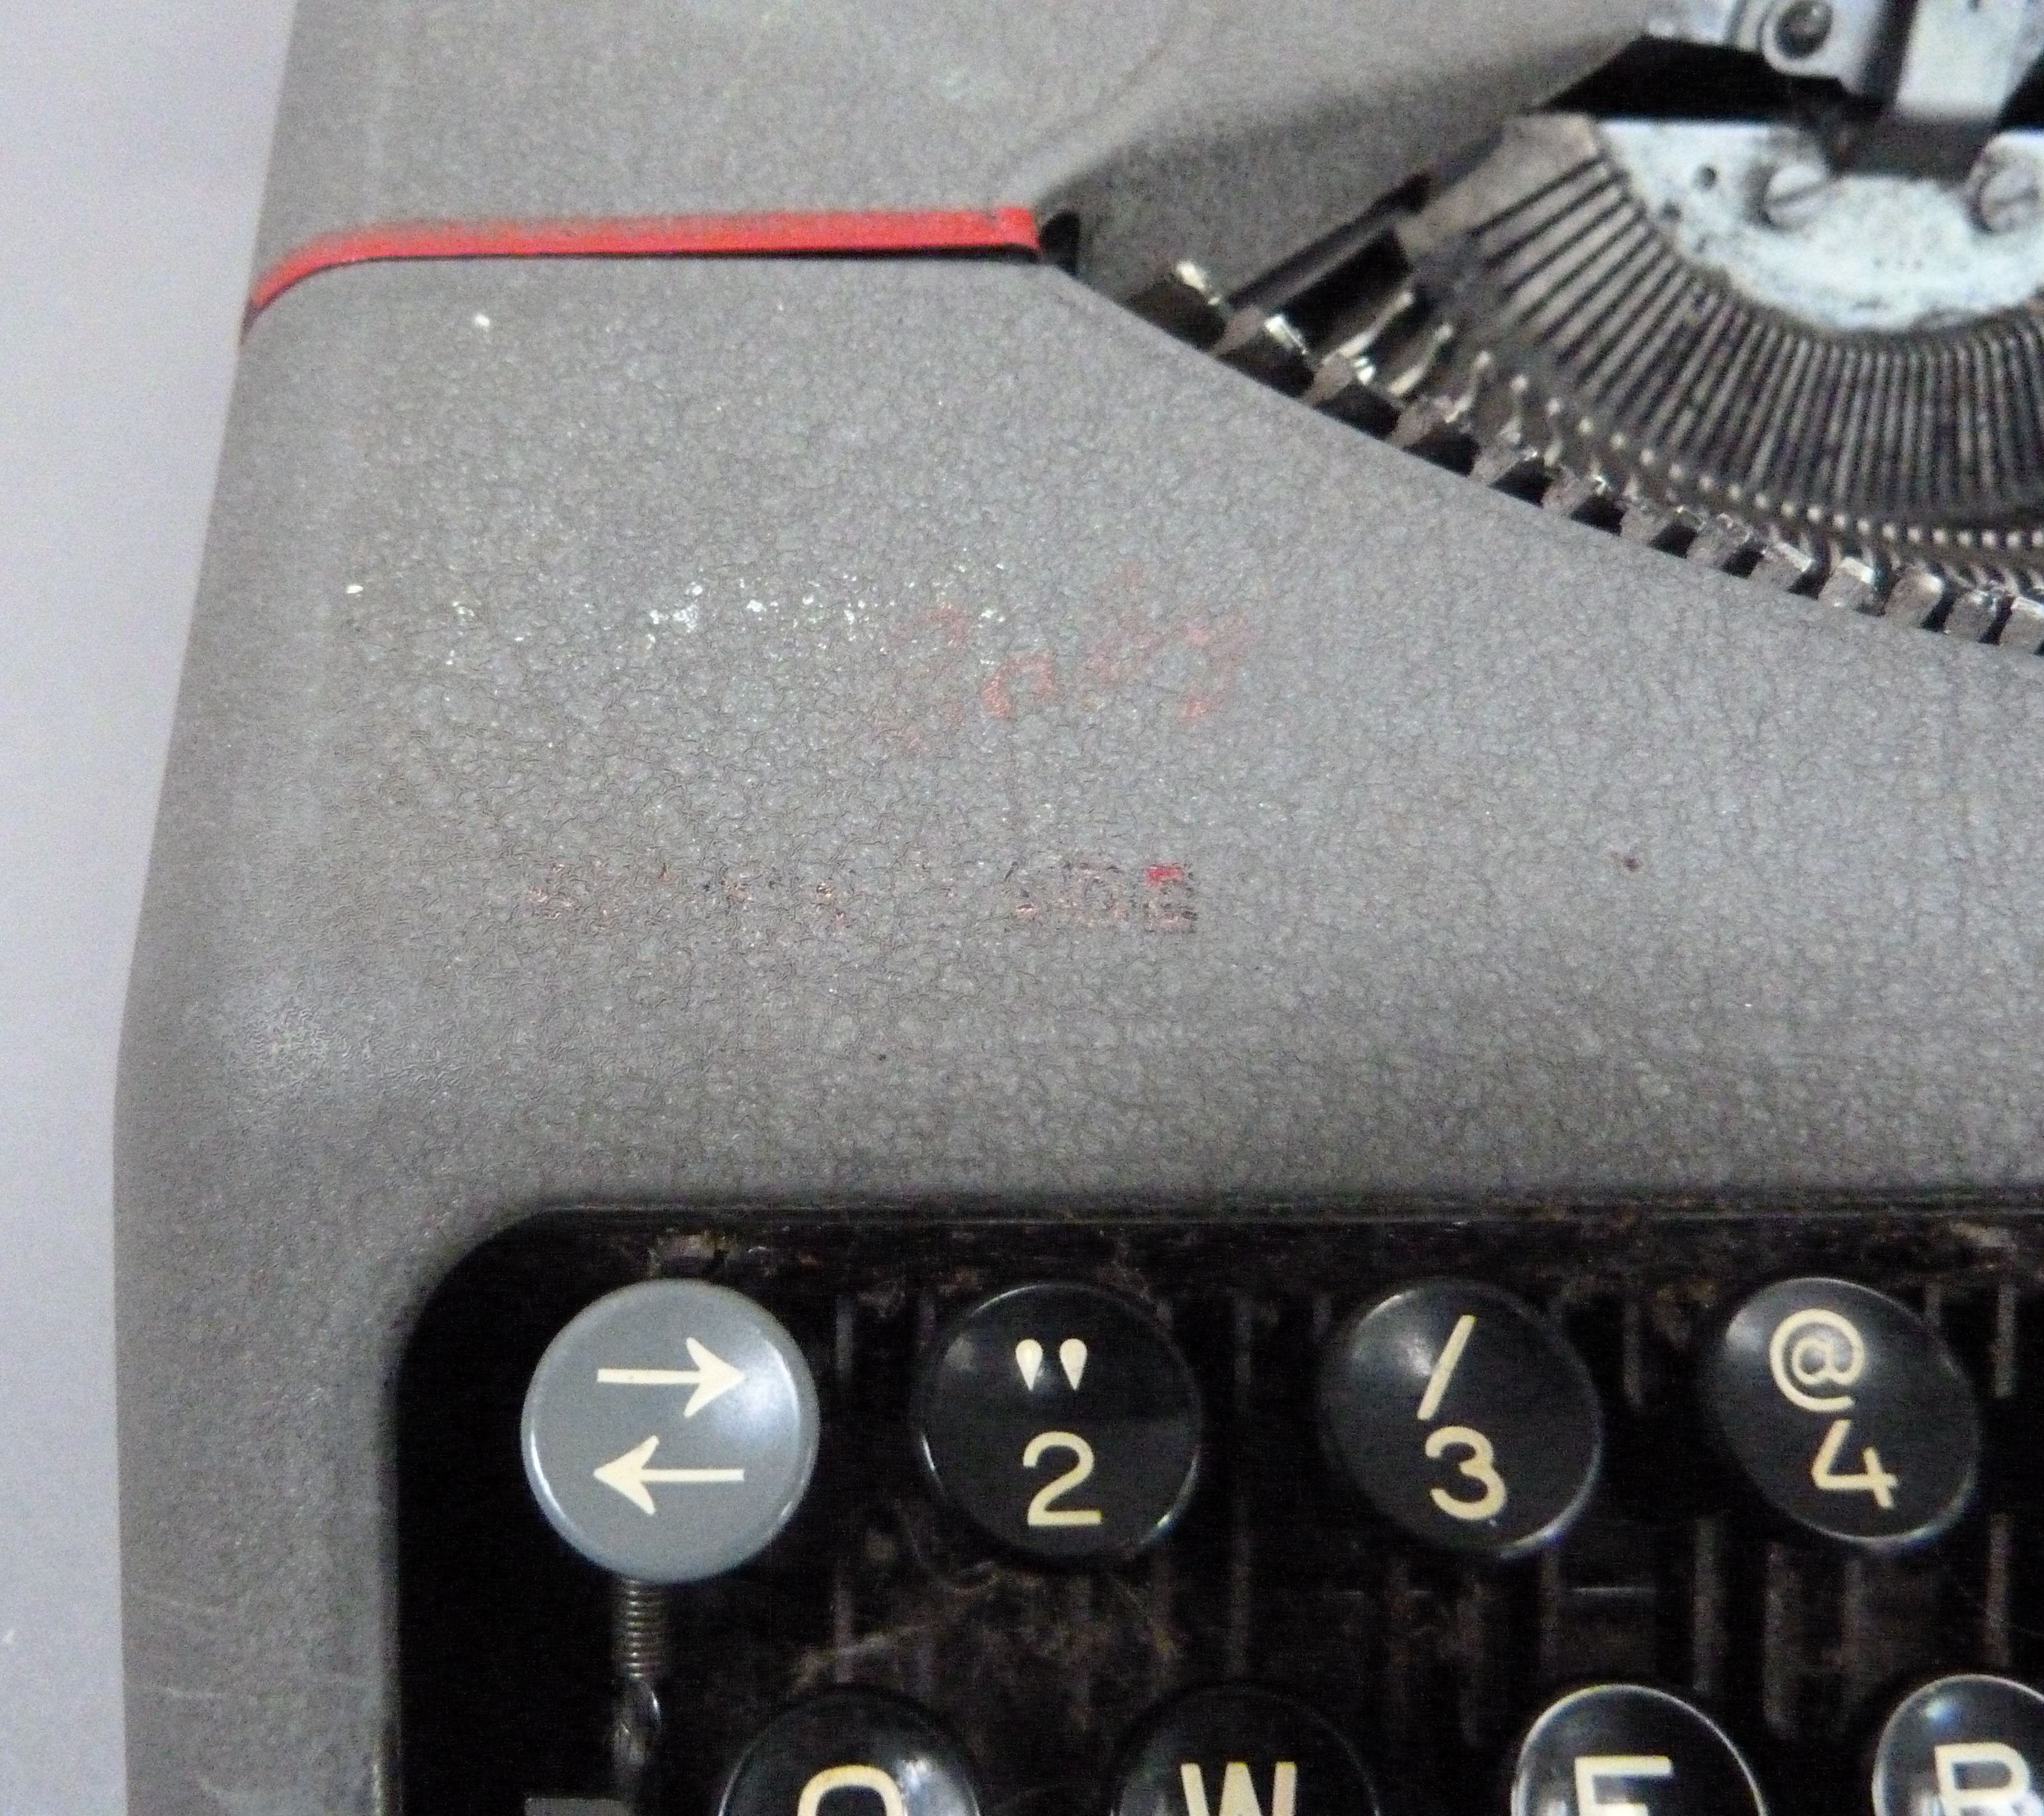 A Hermes portable typewriter by Paillard in grey metal case - Image 4 of 4